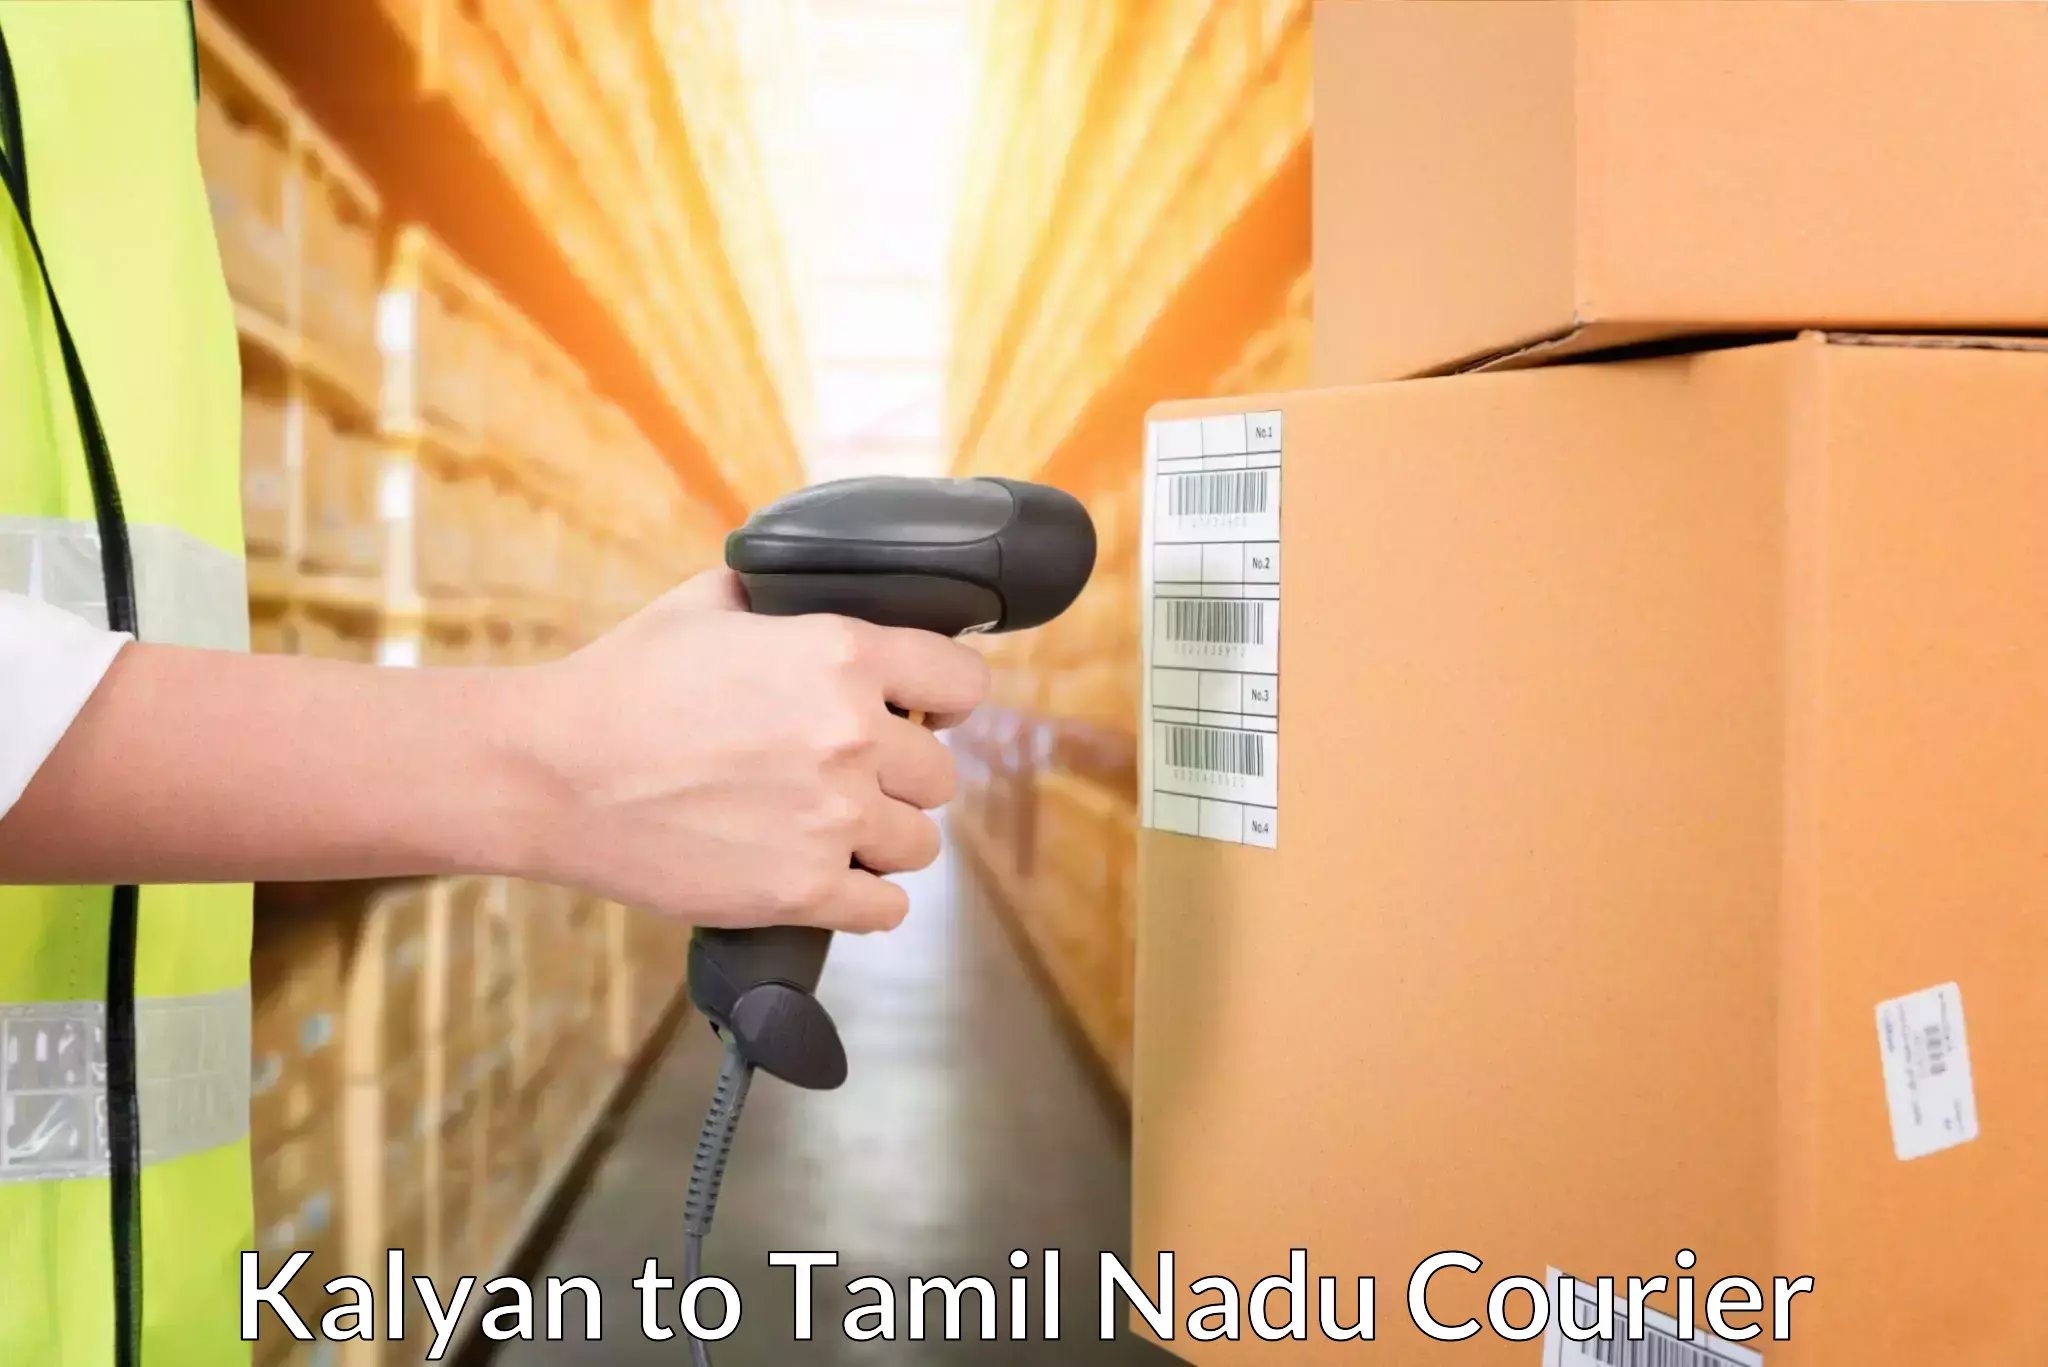 Sustainable shipping practices Kalyan to Tamil Nadu